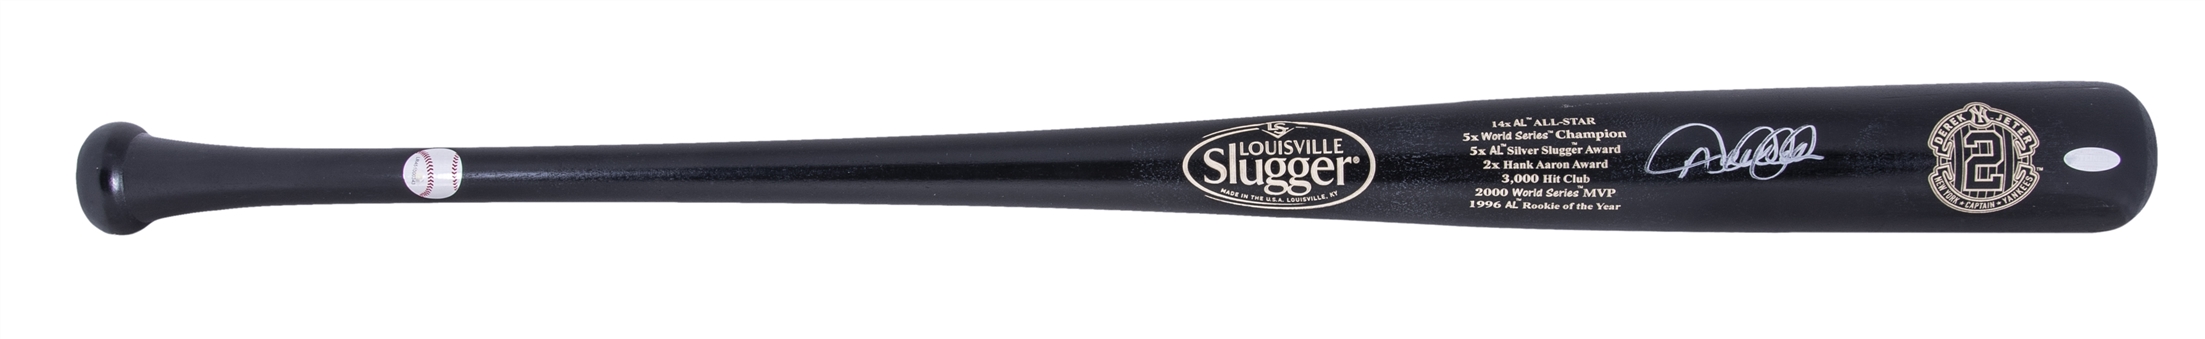 Derek Jeter Signed Louisville Slugger Engraved Stat Bat (MLB Authenticated & Steiner)